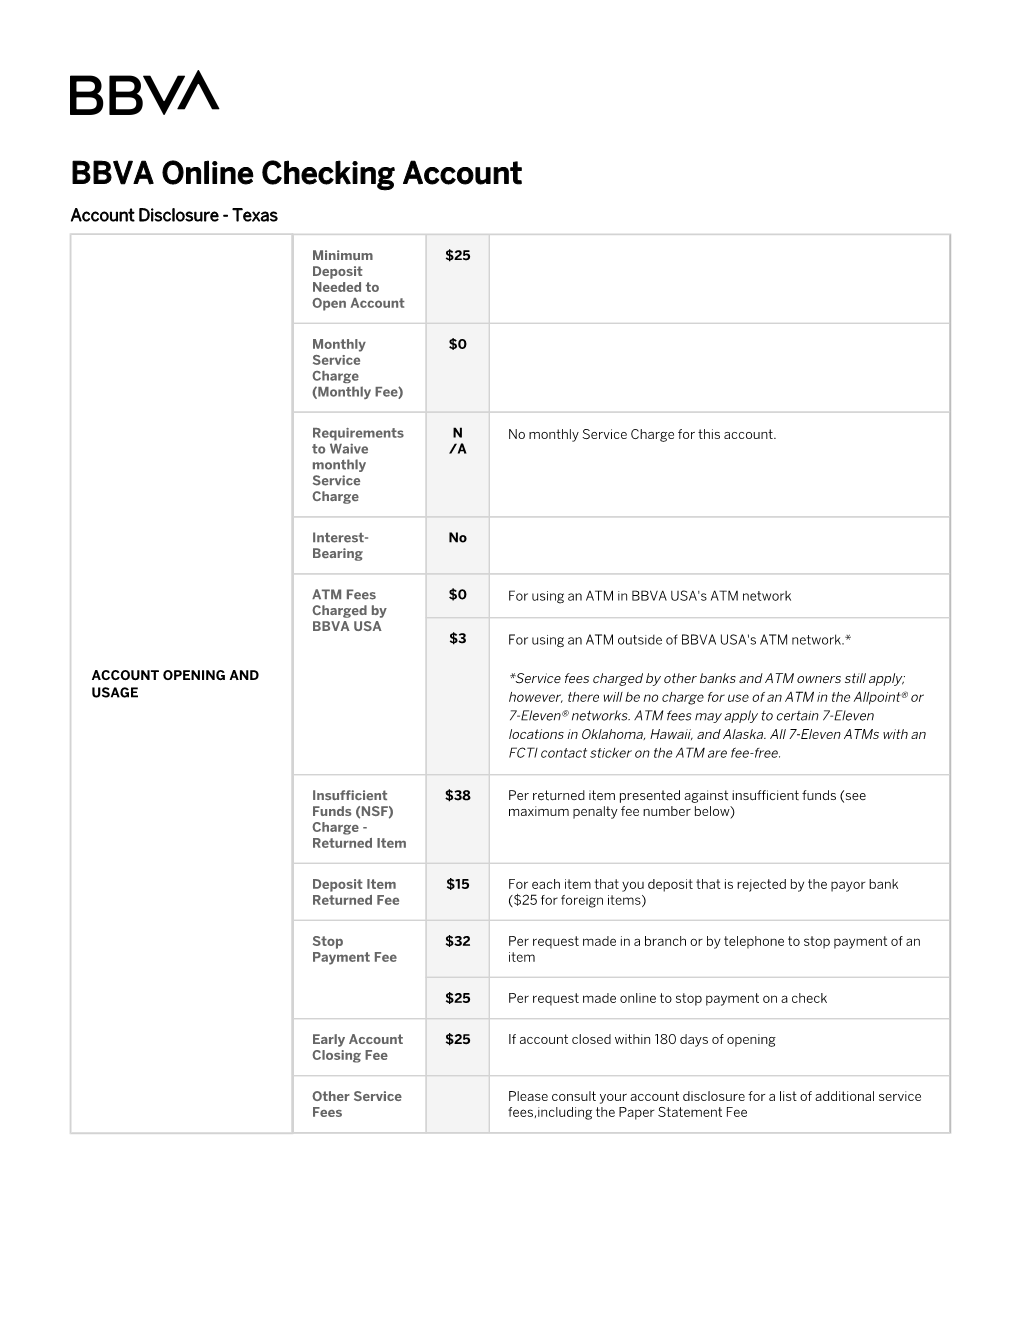 BBVA Online Checking Account Disclosure: Texas